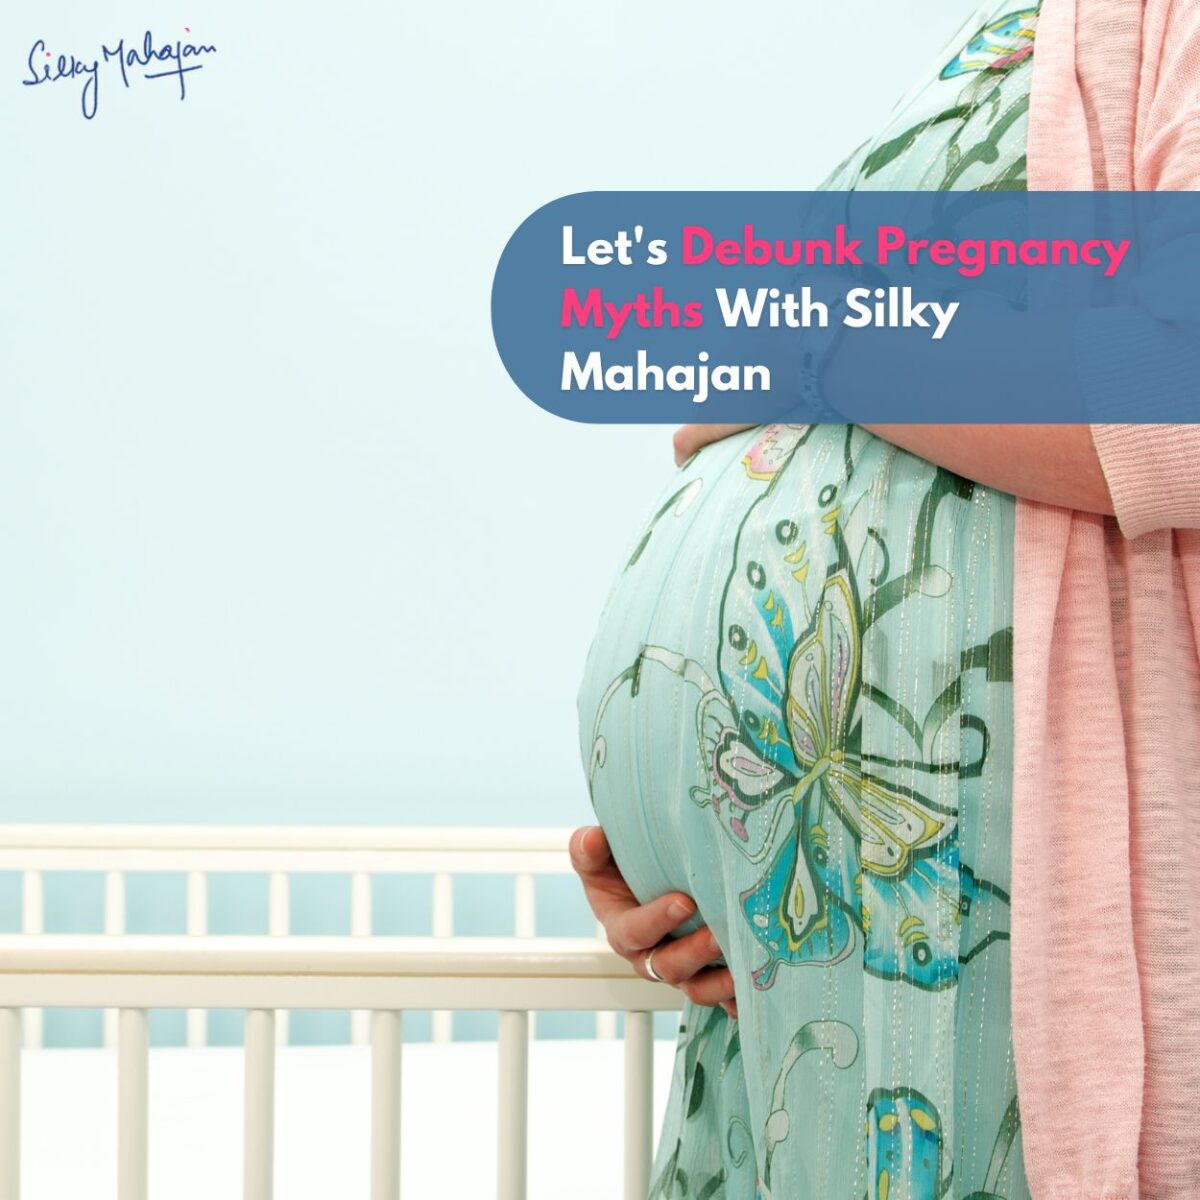 Let’s Debunk Pregnancy Myths With Silky Mahajan